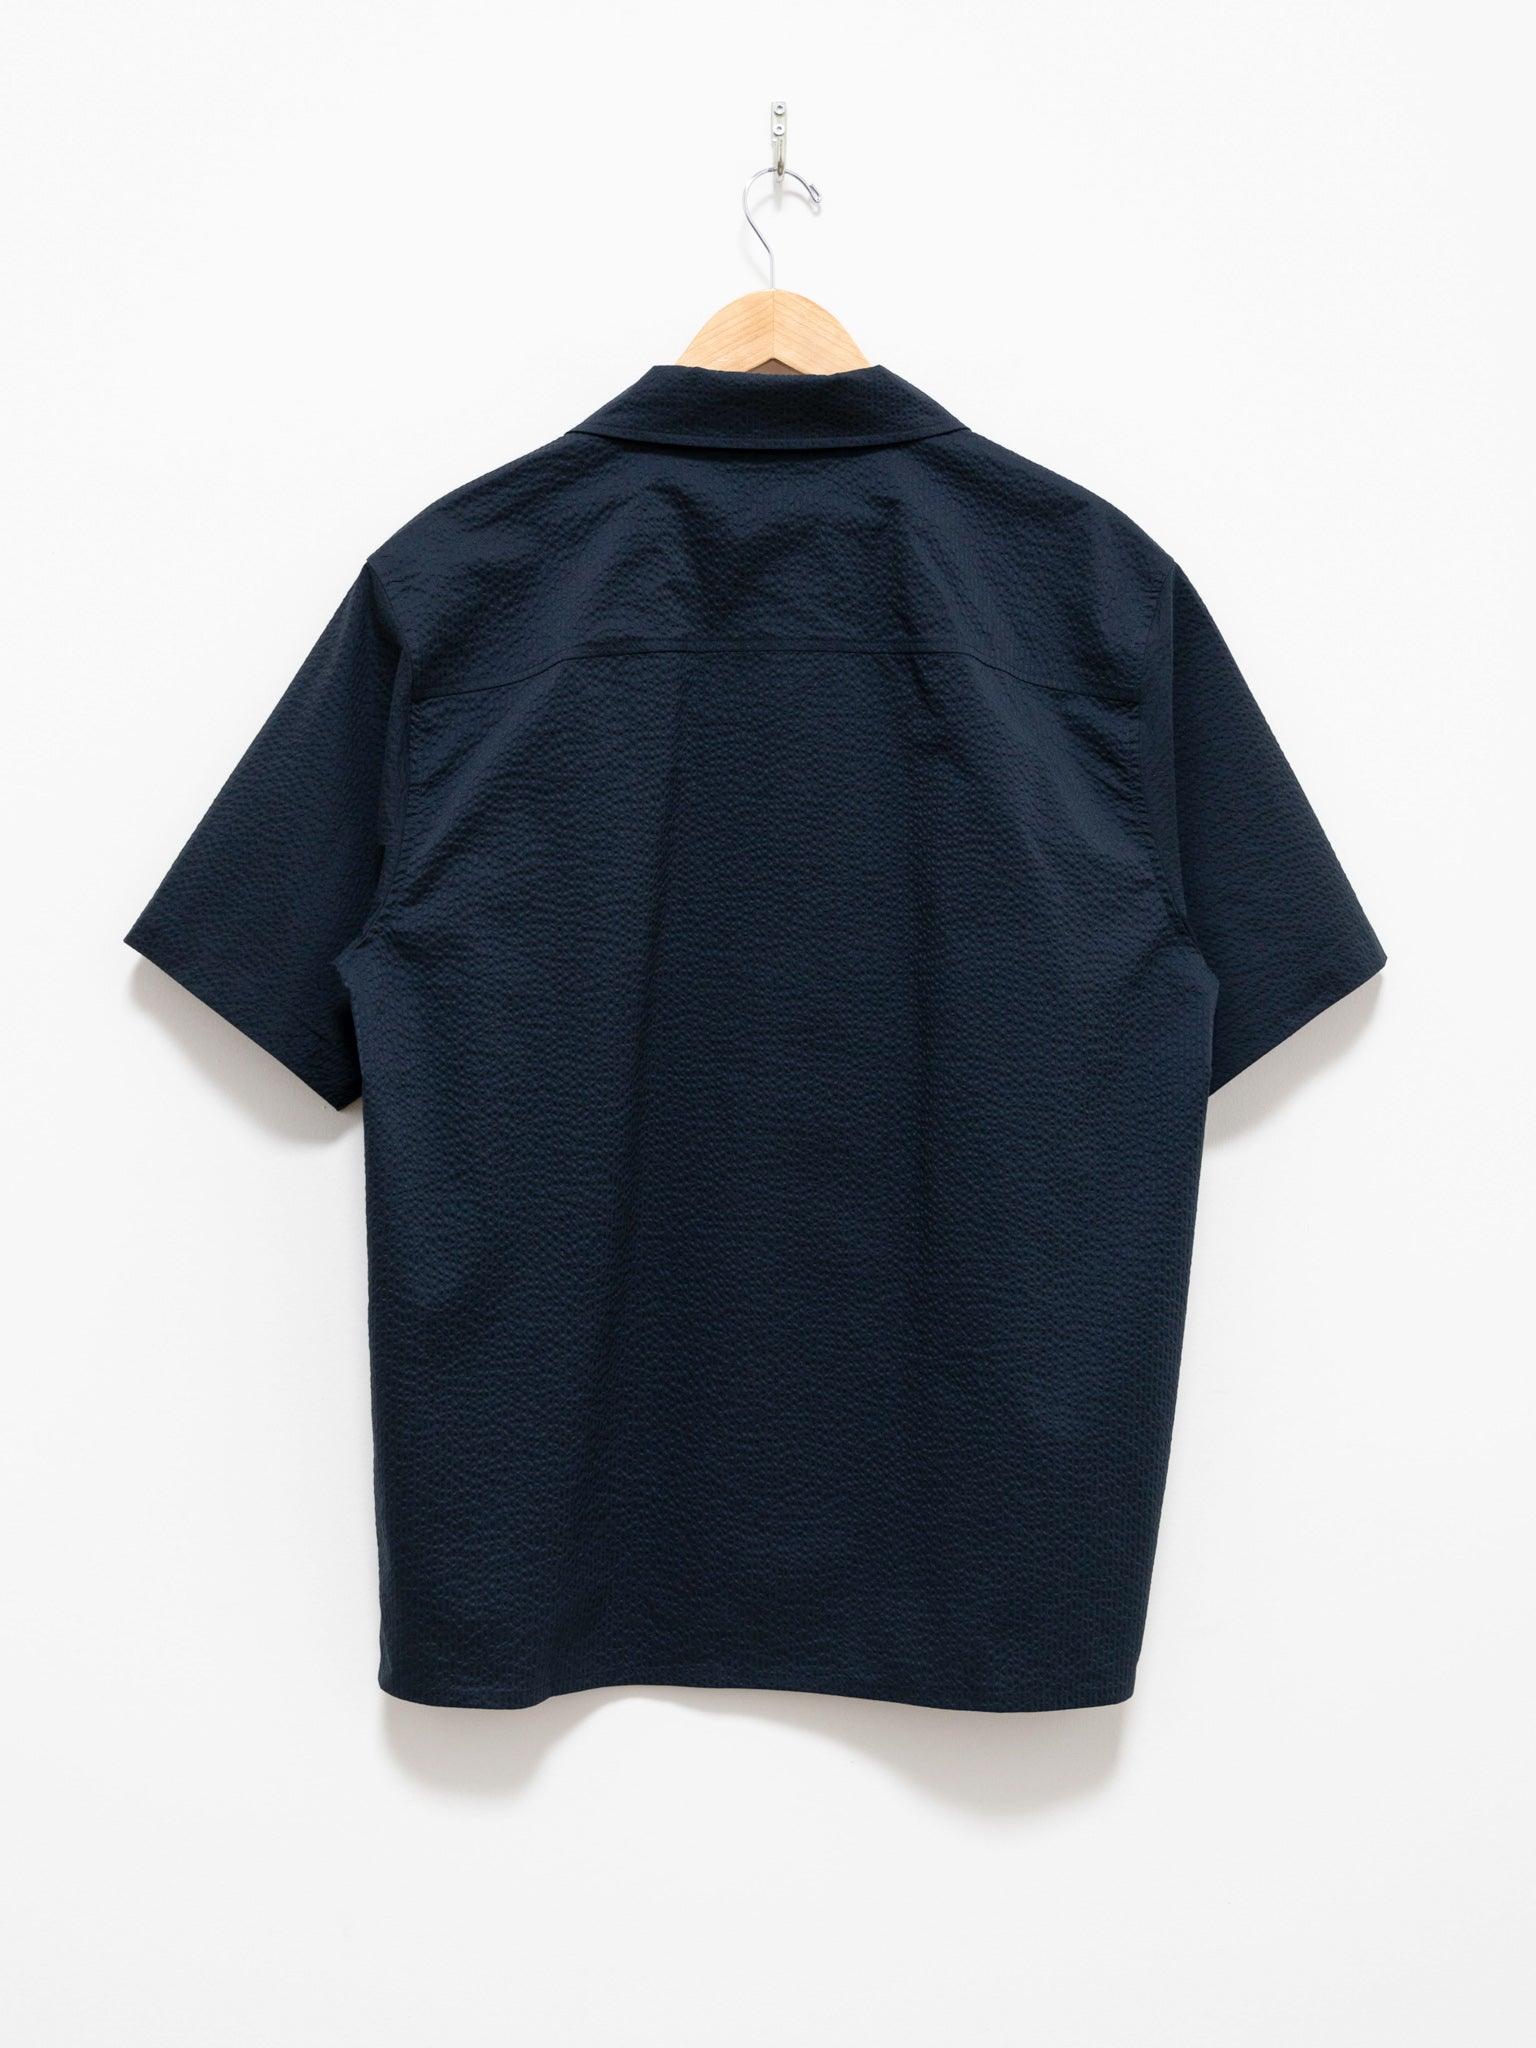 Namu Shop - Document Seersucker Handkerchief Shirt - Navy